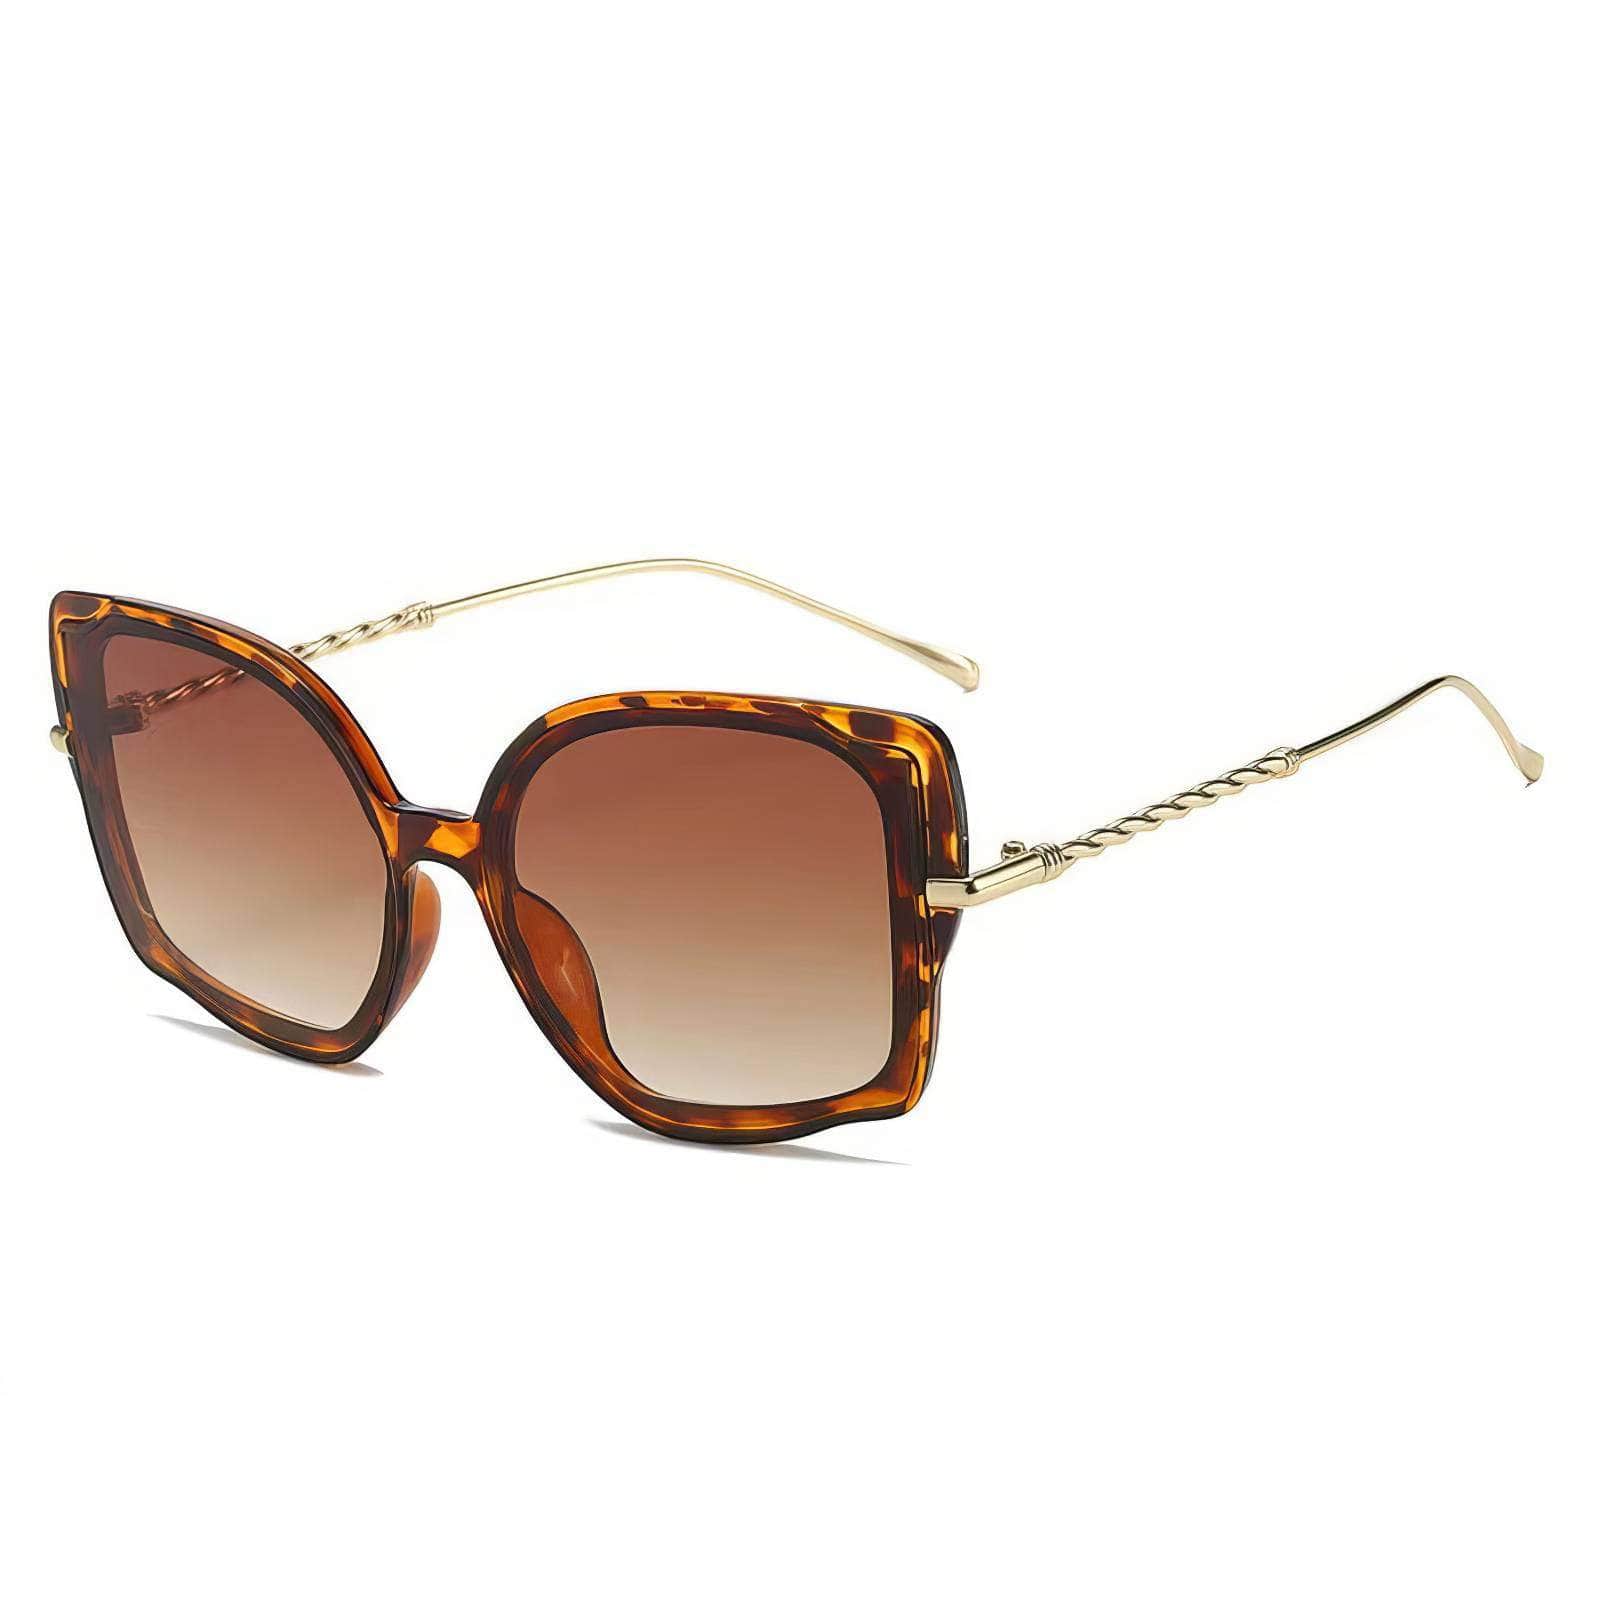 Gold Oversized Square Sunglasses Leopard Tan / Resin